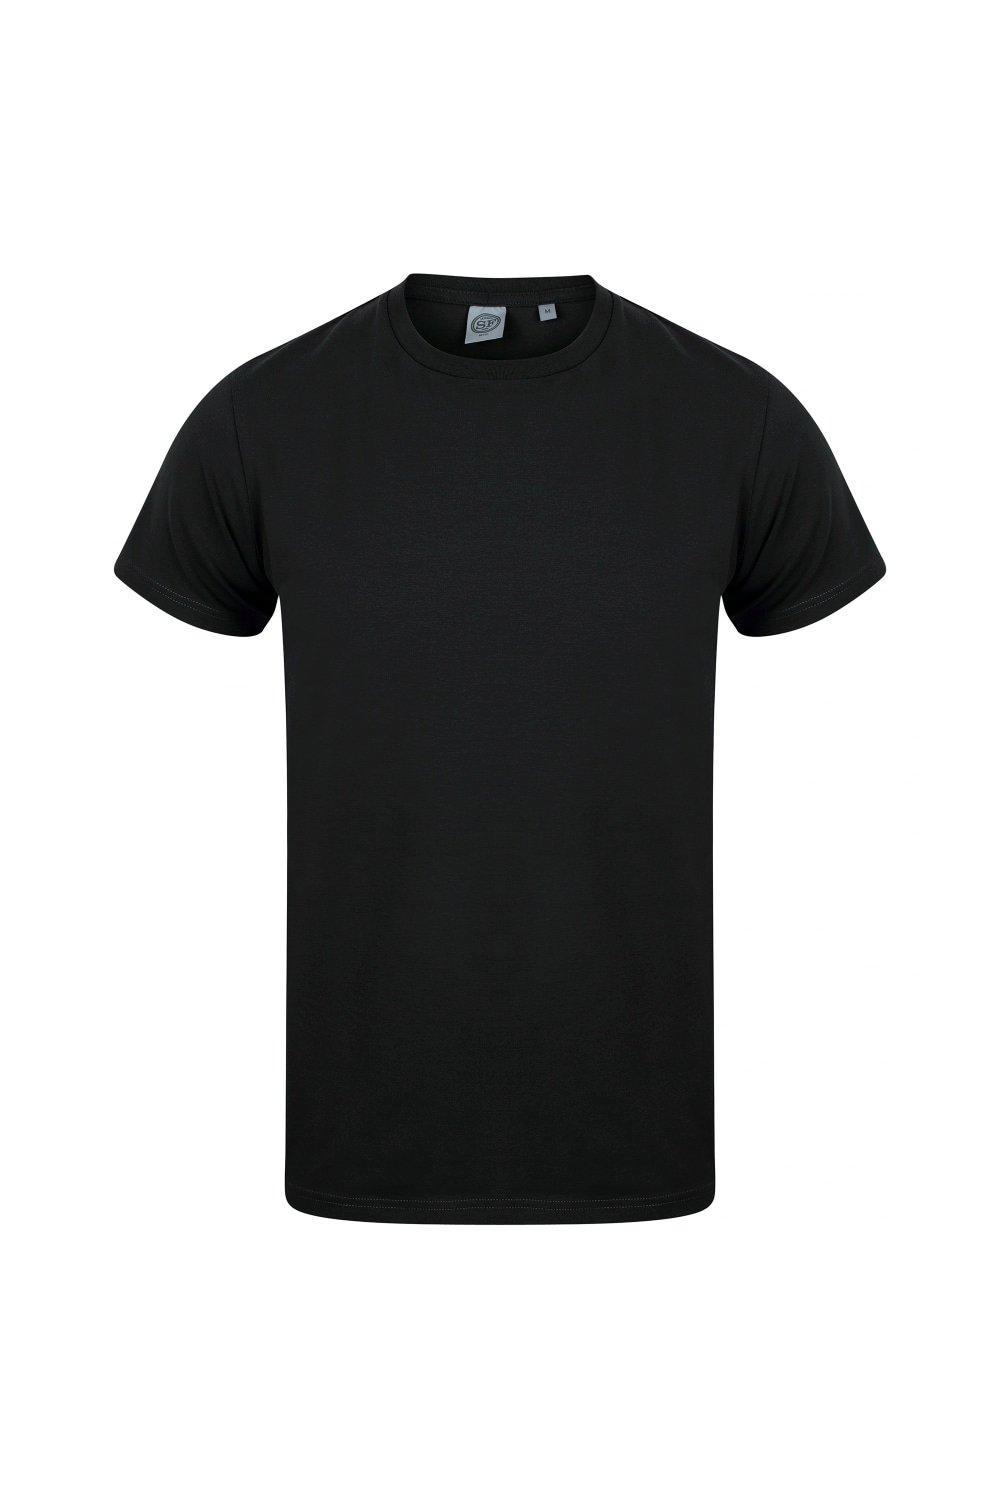 Эластичная футболка SF Minni Feel Good Skinni Fit, черный узкие спортивные брюки skinni minni с манжетами skinni fit черный